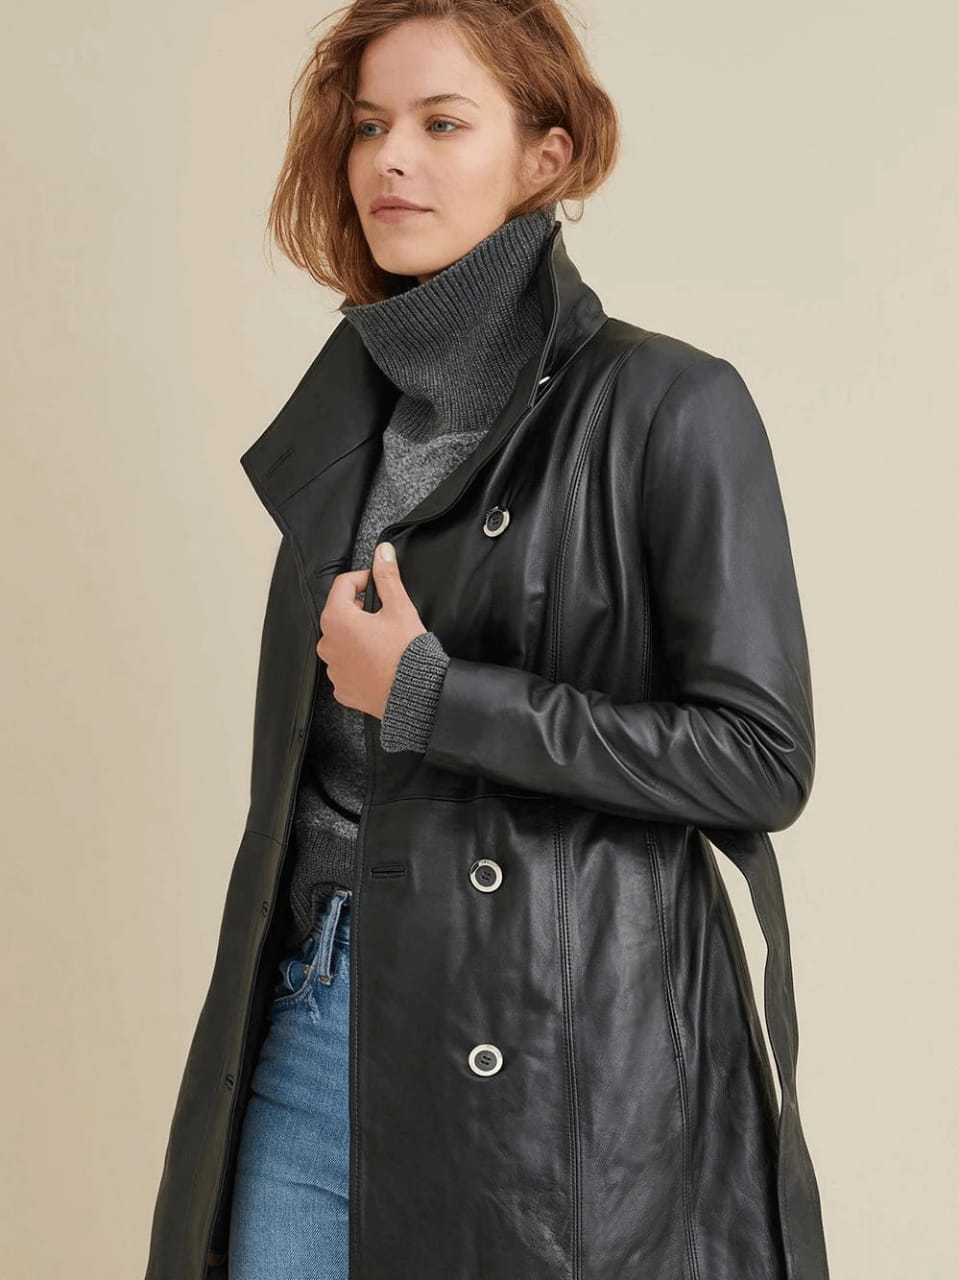 Women's Long Black Leather Coat